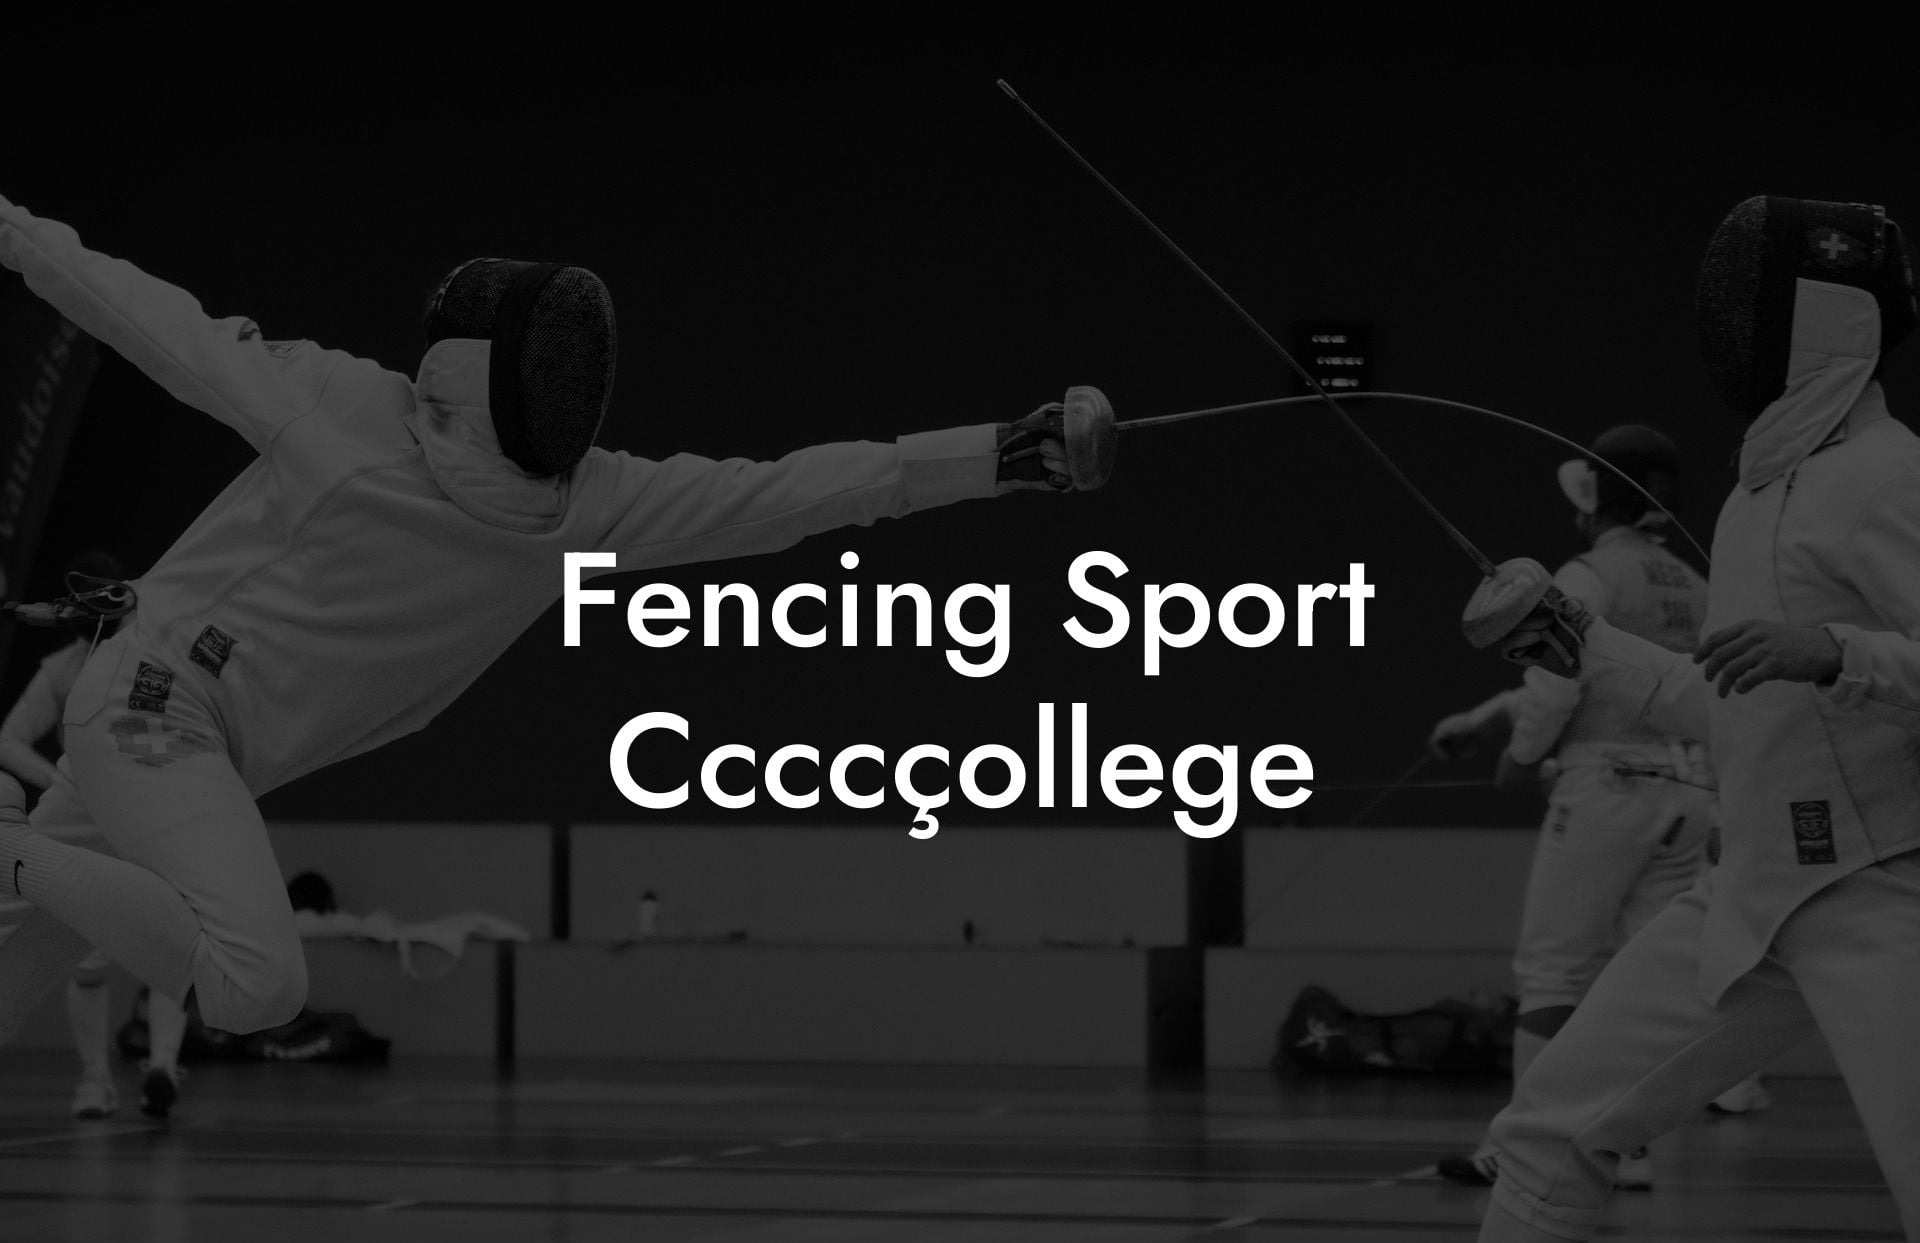 Fencing Sport Ccccçollege